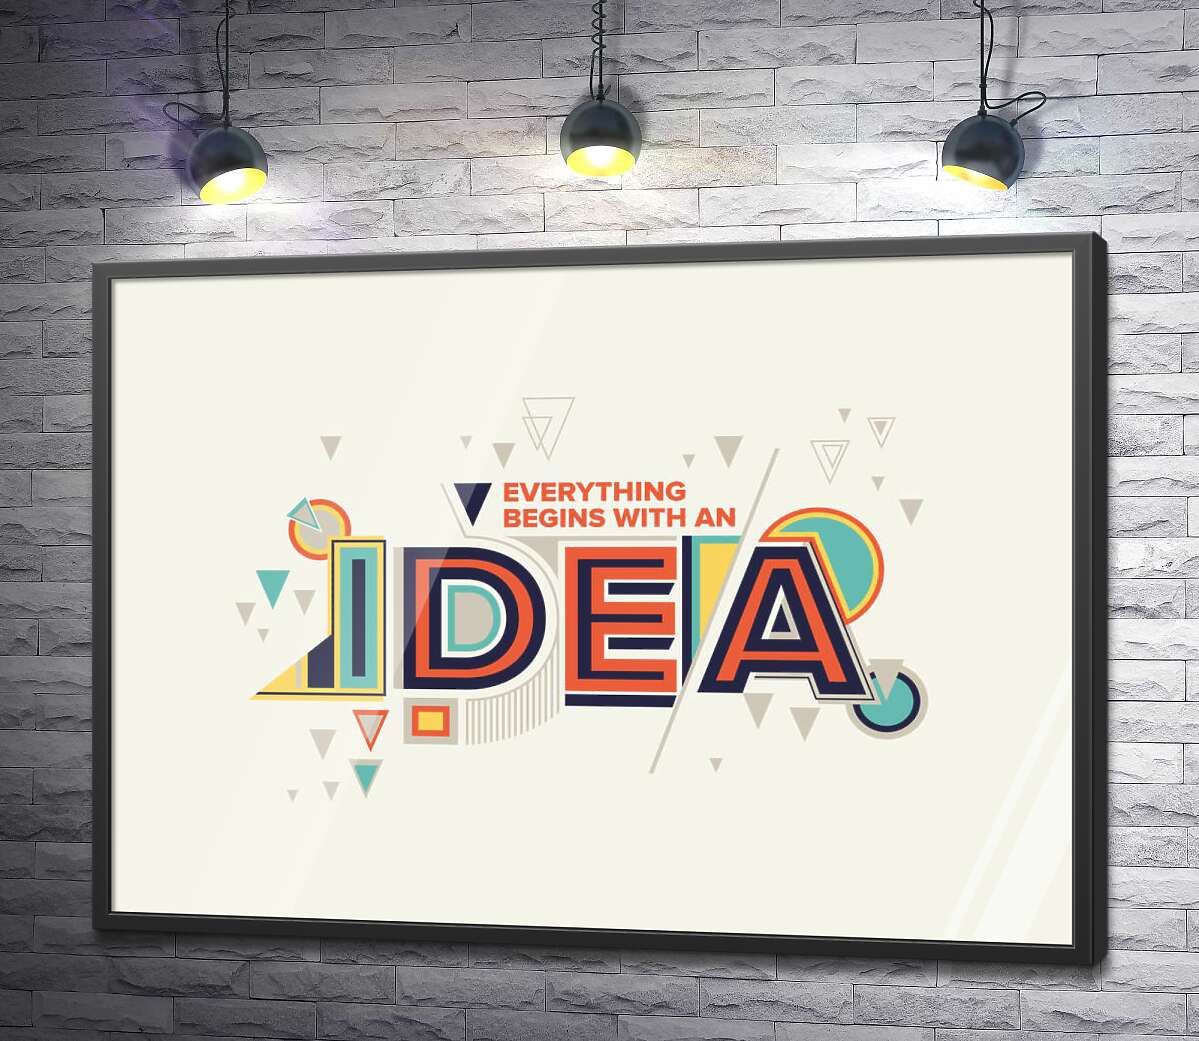 постер Геометричне оформлення фрази "everything begins with an idea"